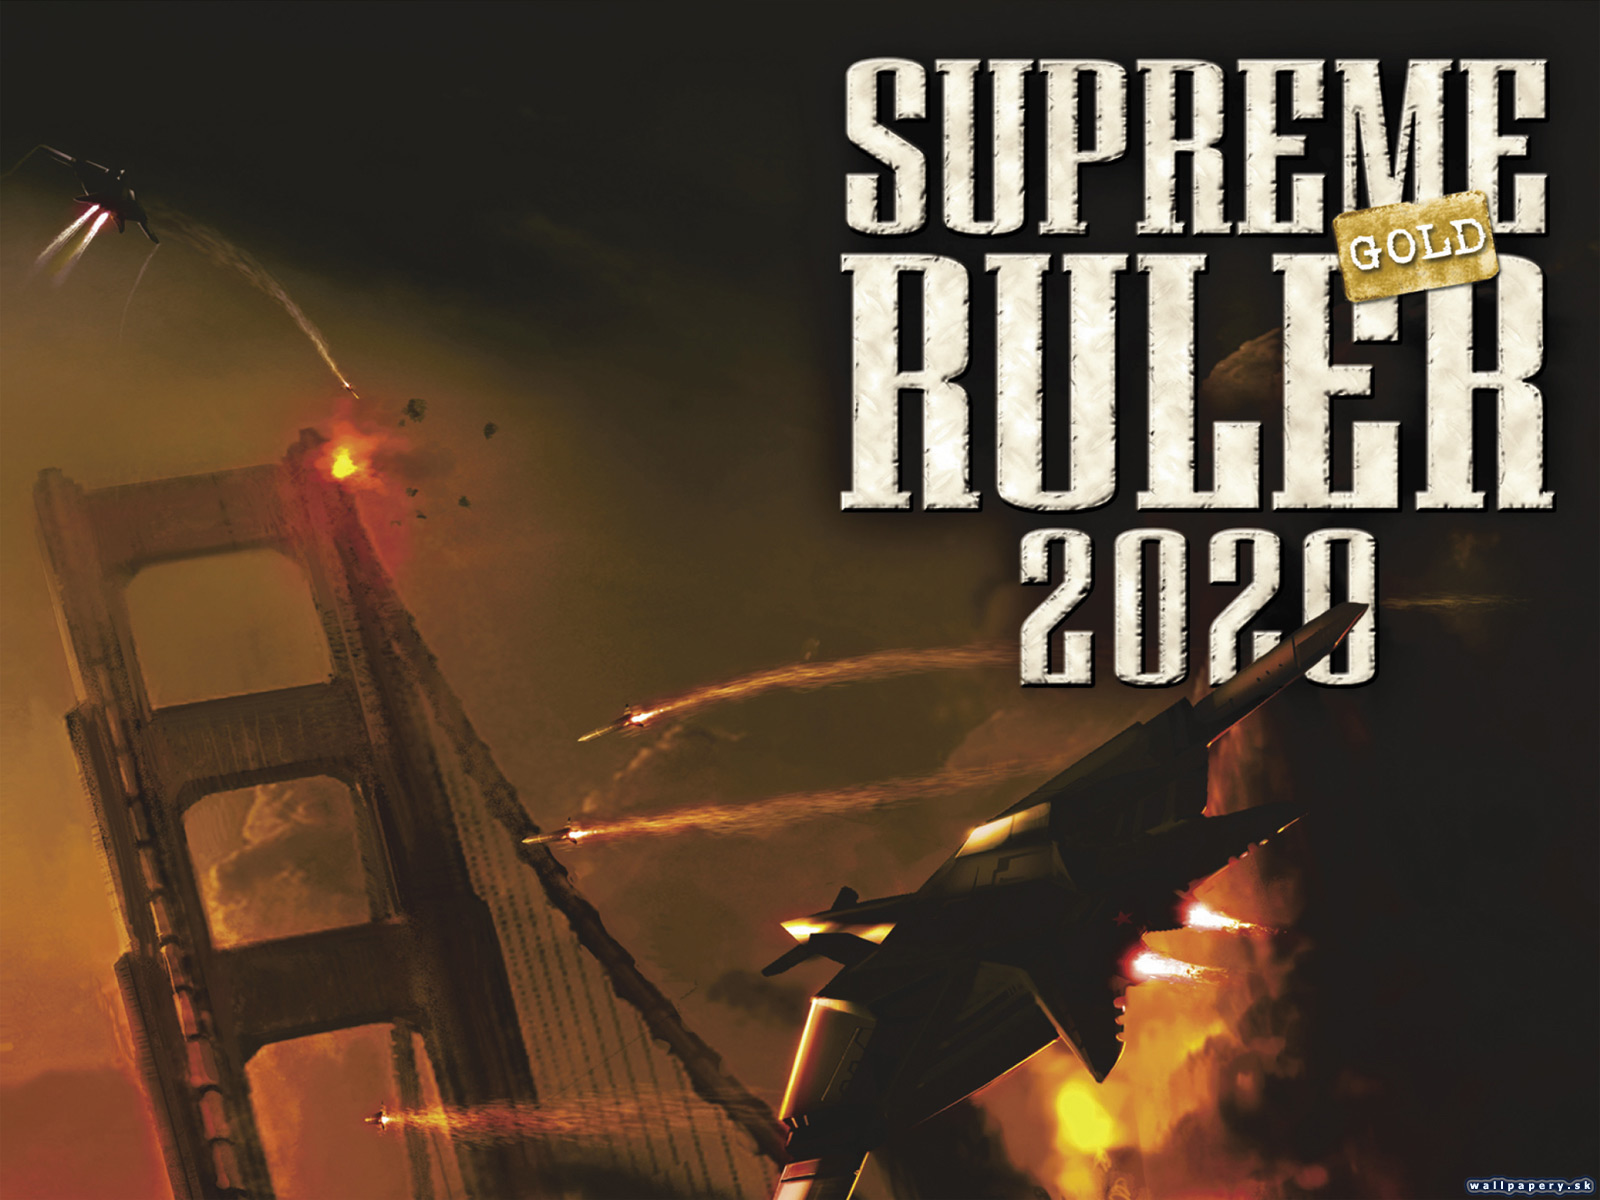 Supreme Ruler 2020: GOLD - wallpaper 2